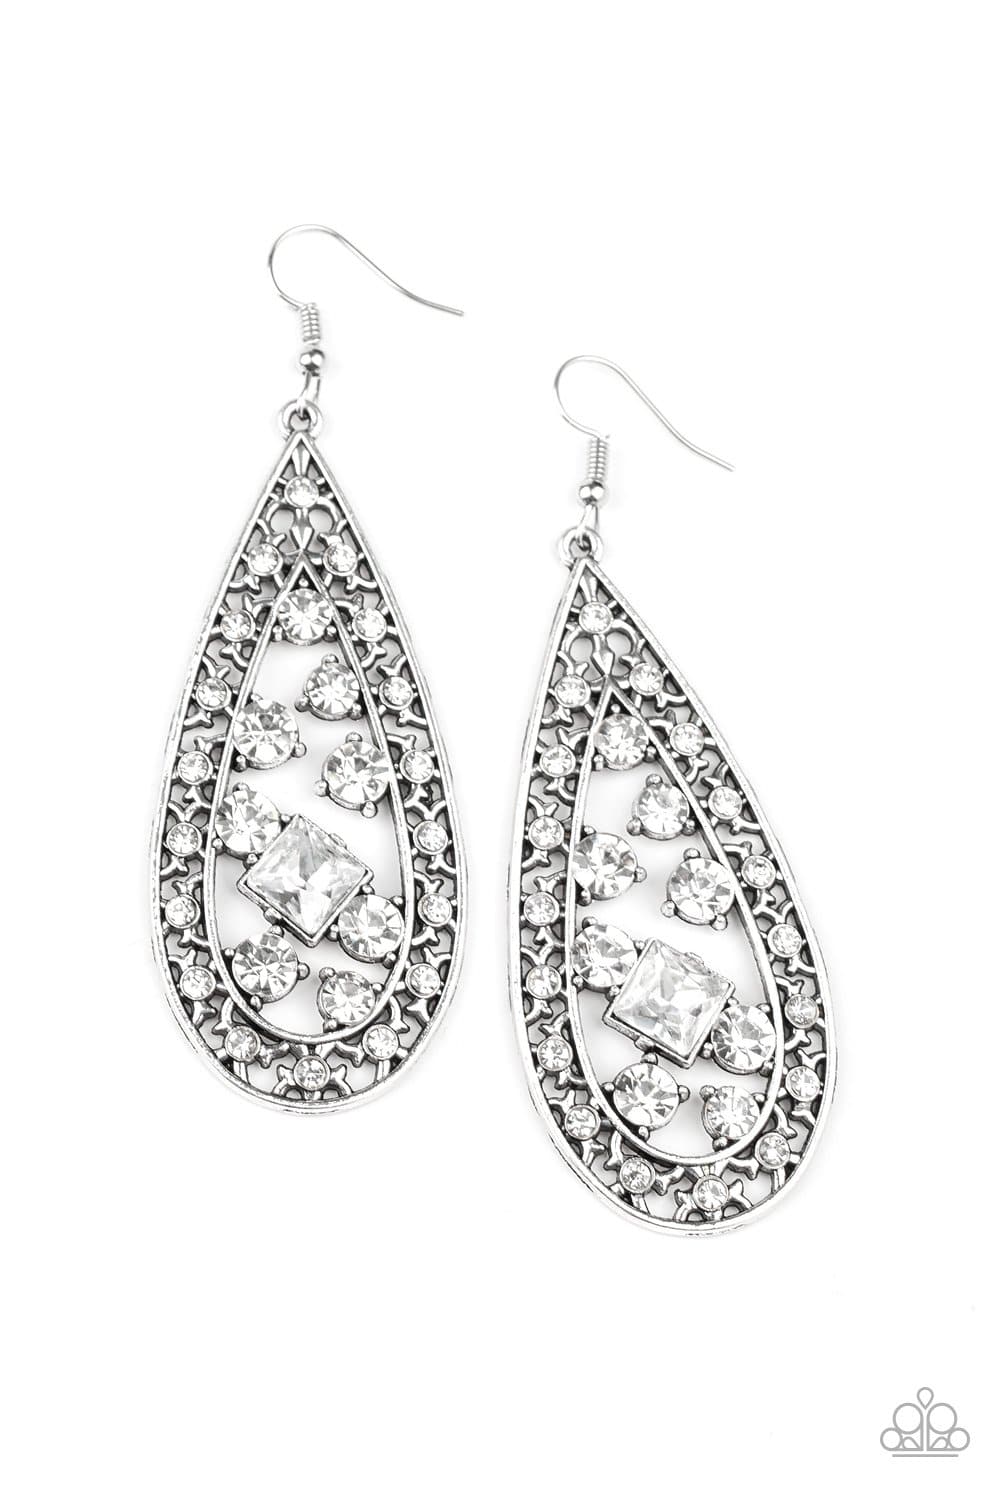 Drop-Dead Dazzle - White Rhinestone Earrings - Paparazzi Accessories - GlaMarous Titi Jewels